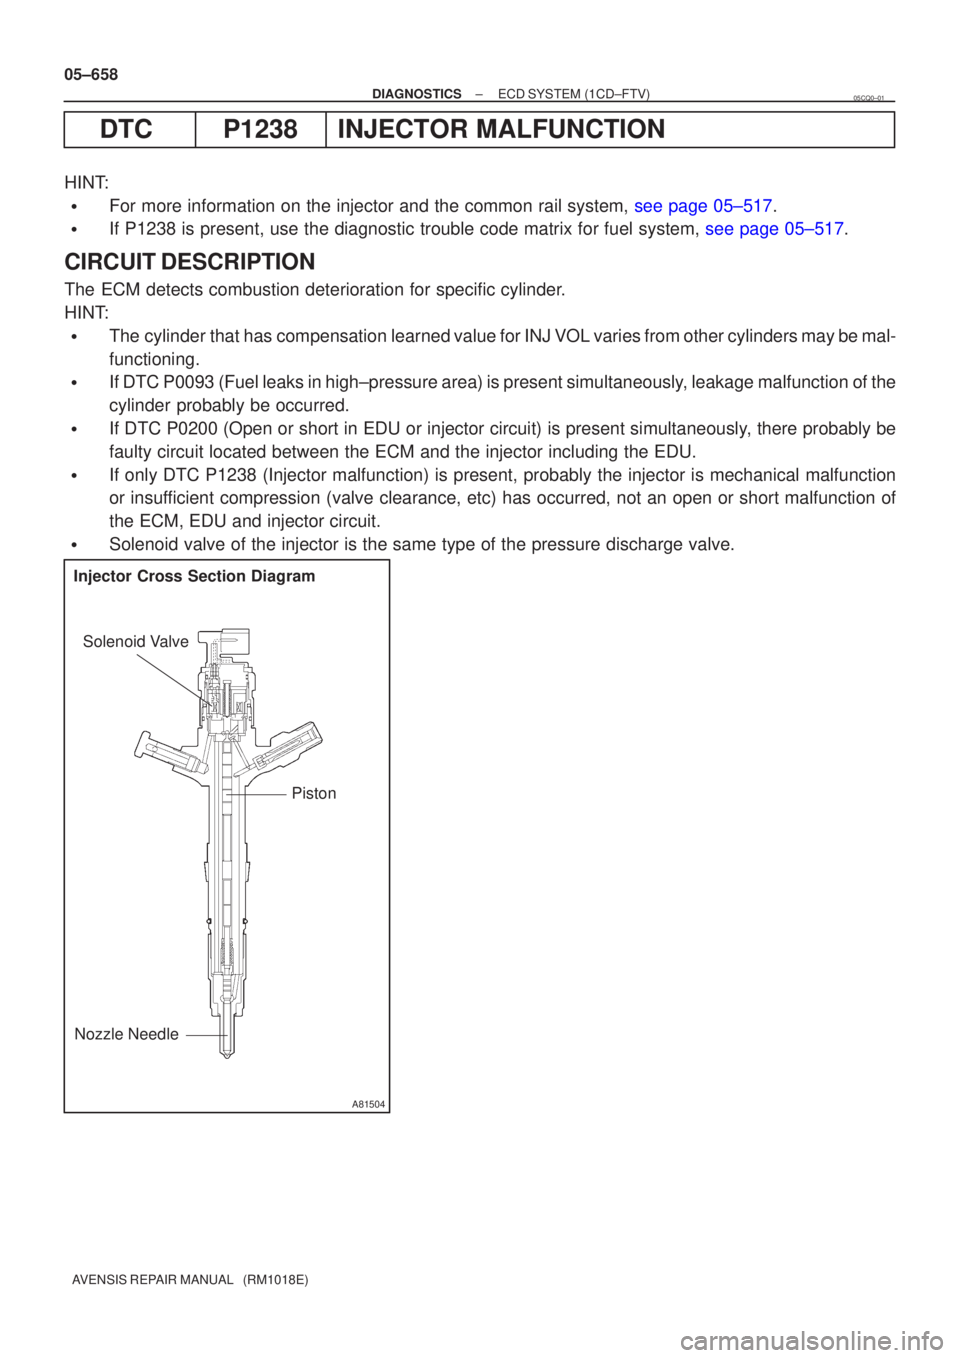 TOYOTA AVENSIS 2005  Service Repair Manual A81504
Injector Cross Section DiagramPiston
Solenoid Valve
Nozzle Needle
05±658
±
DIAGNOSTICS ECD SYSTEM(1CD±FTV)
AVENSIS REPAIR MANUAL   (RM1018E)
DTCP1238INJECTOR MALFUNCTION
HINT:
For more info